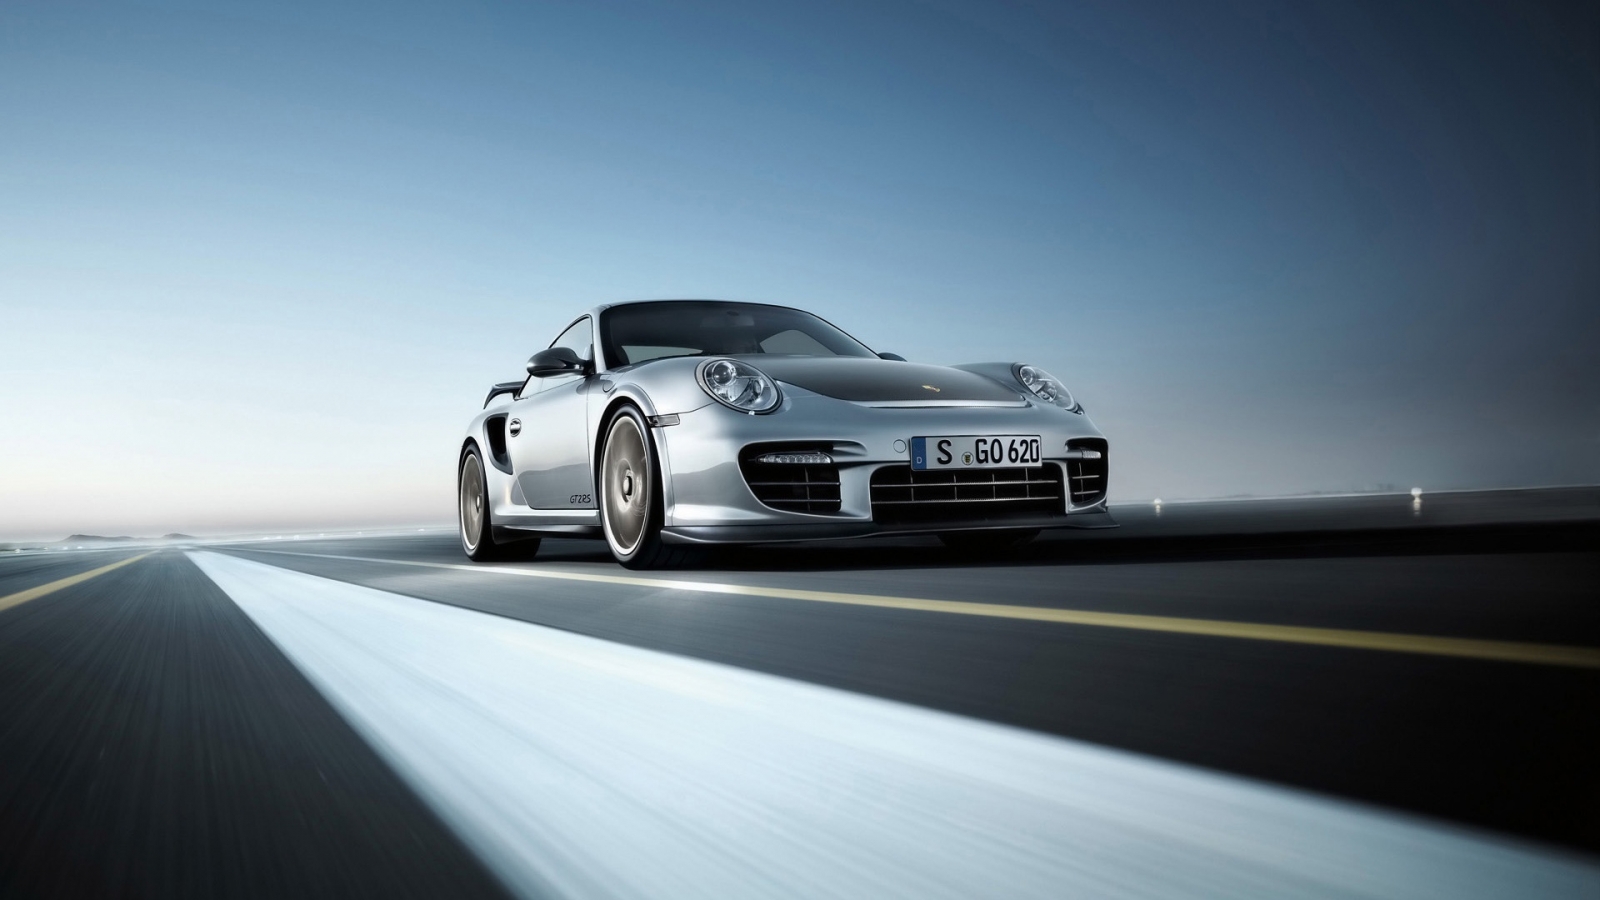 Porsche 911 GT2 RS 2011 Front for 1600 x 900 HDTV resolution